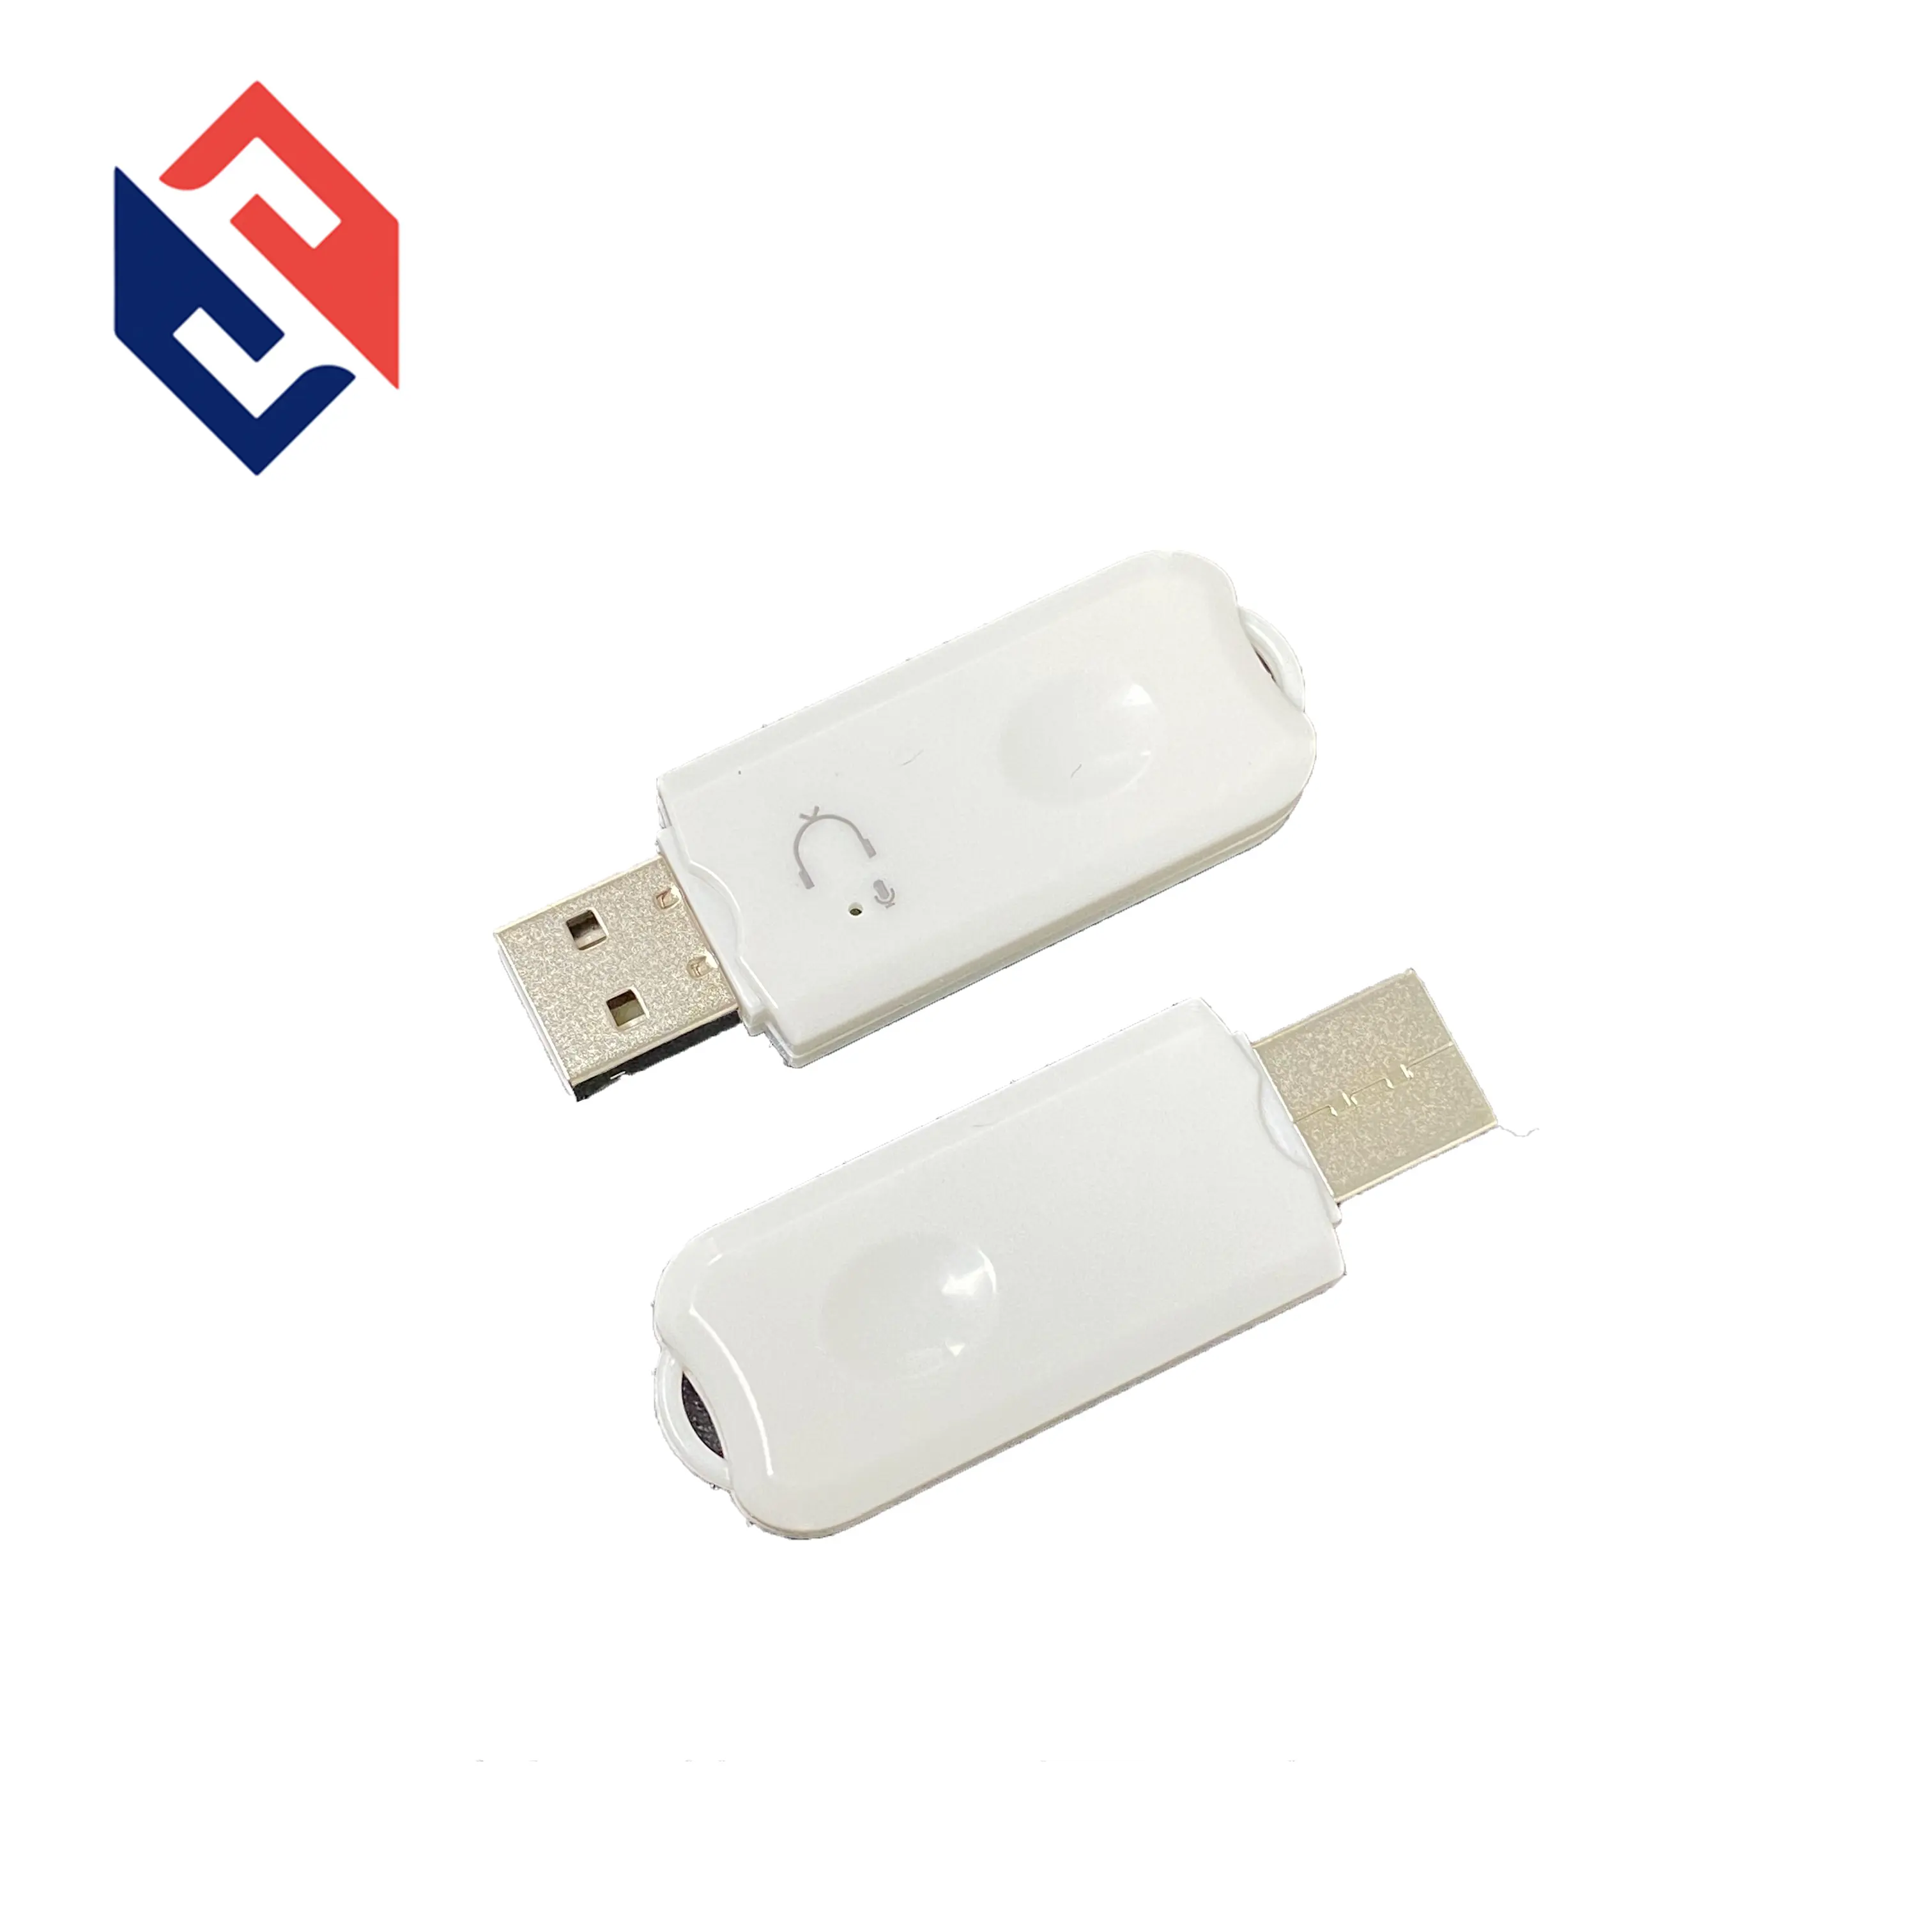 Dongle USB Bluetooth 2,1 + EDR adaptador Dongle Maxesla inalámbrico Bluetooth transmisor receptor USB Bluetooth dongle 5,0